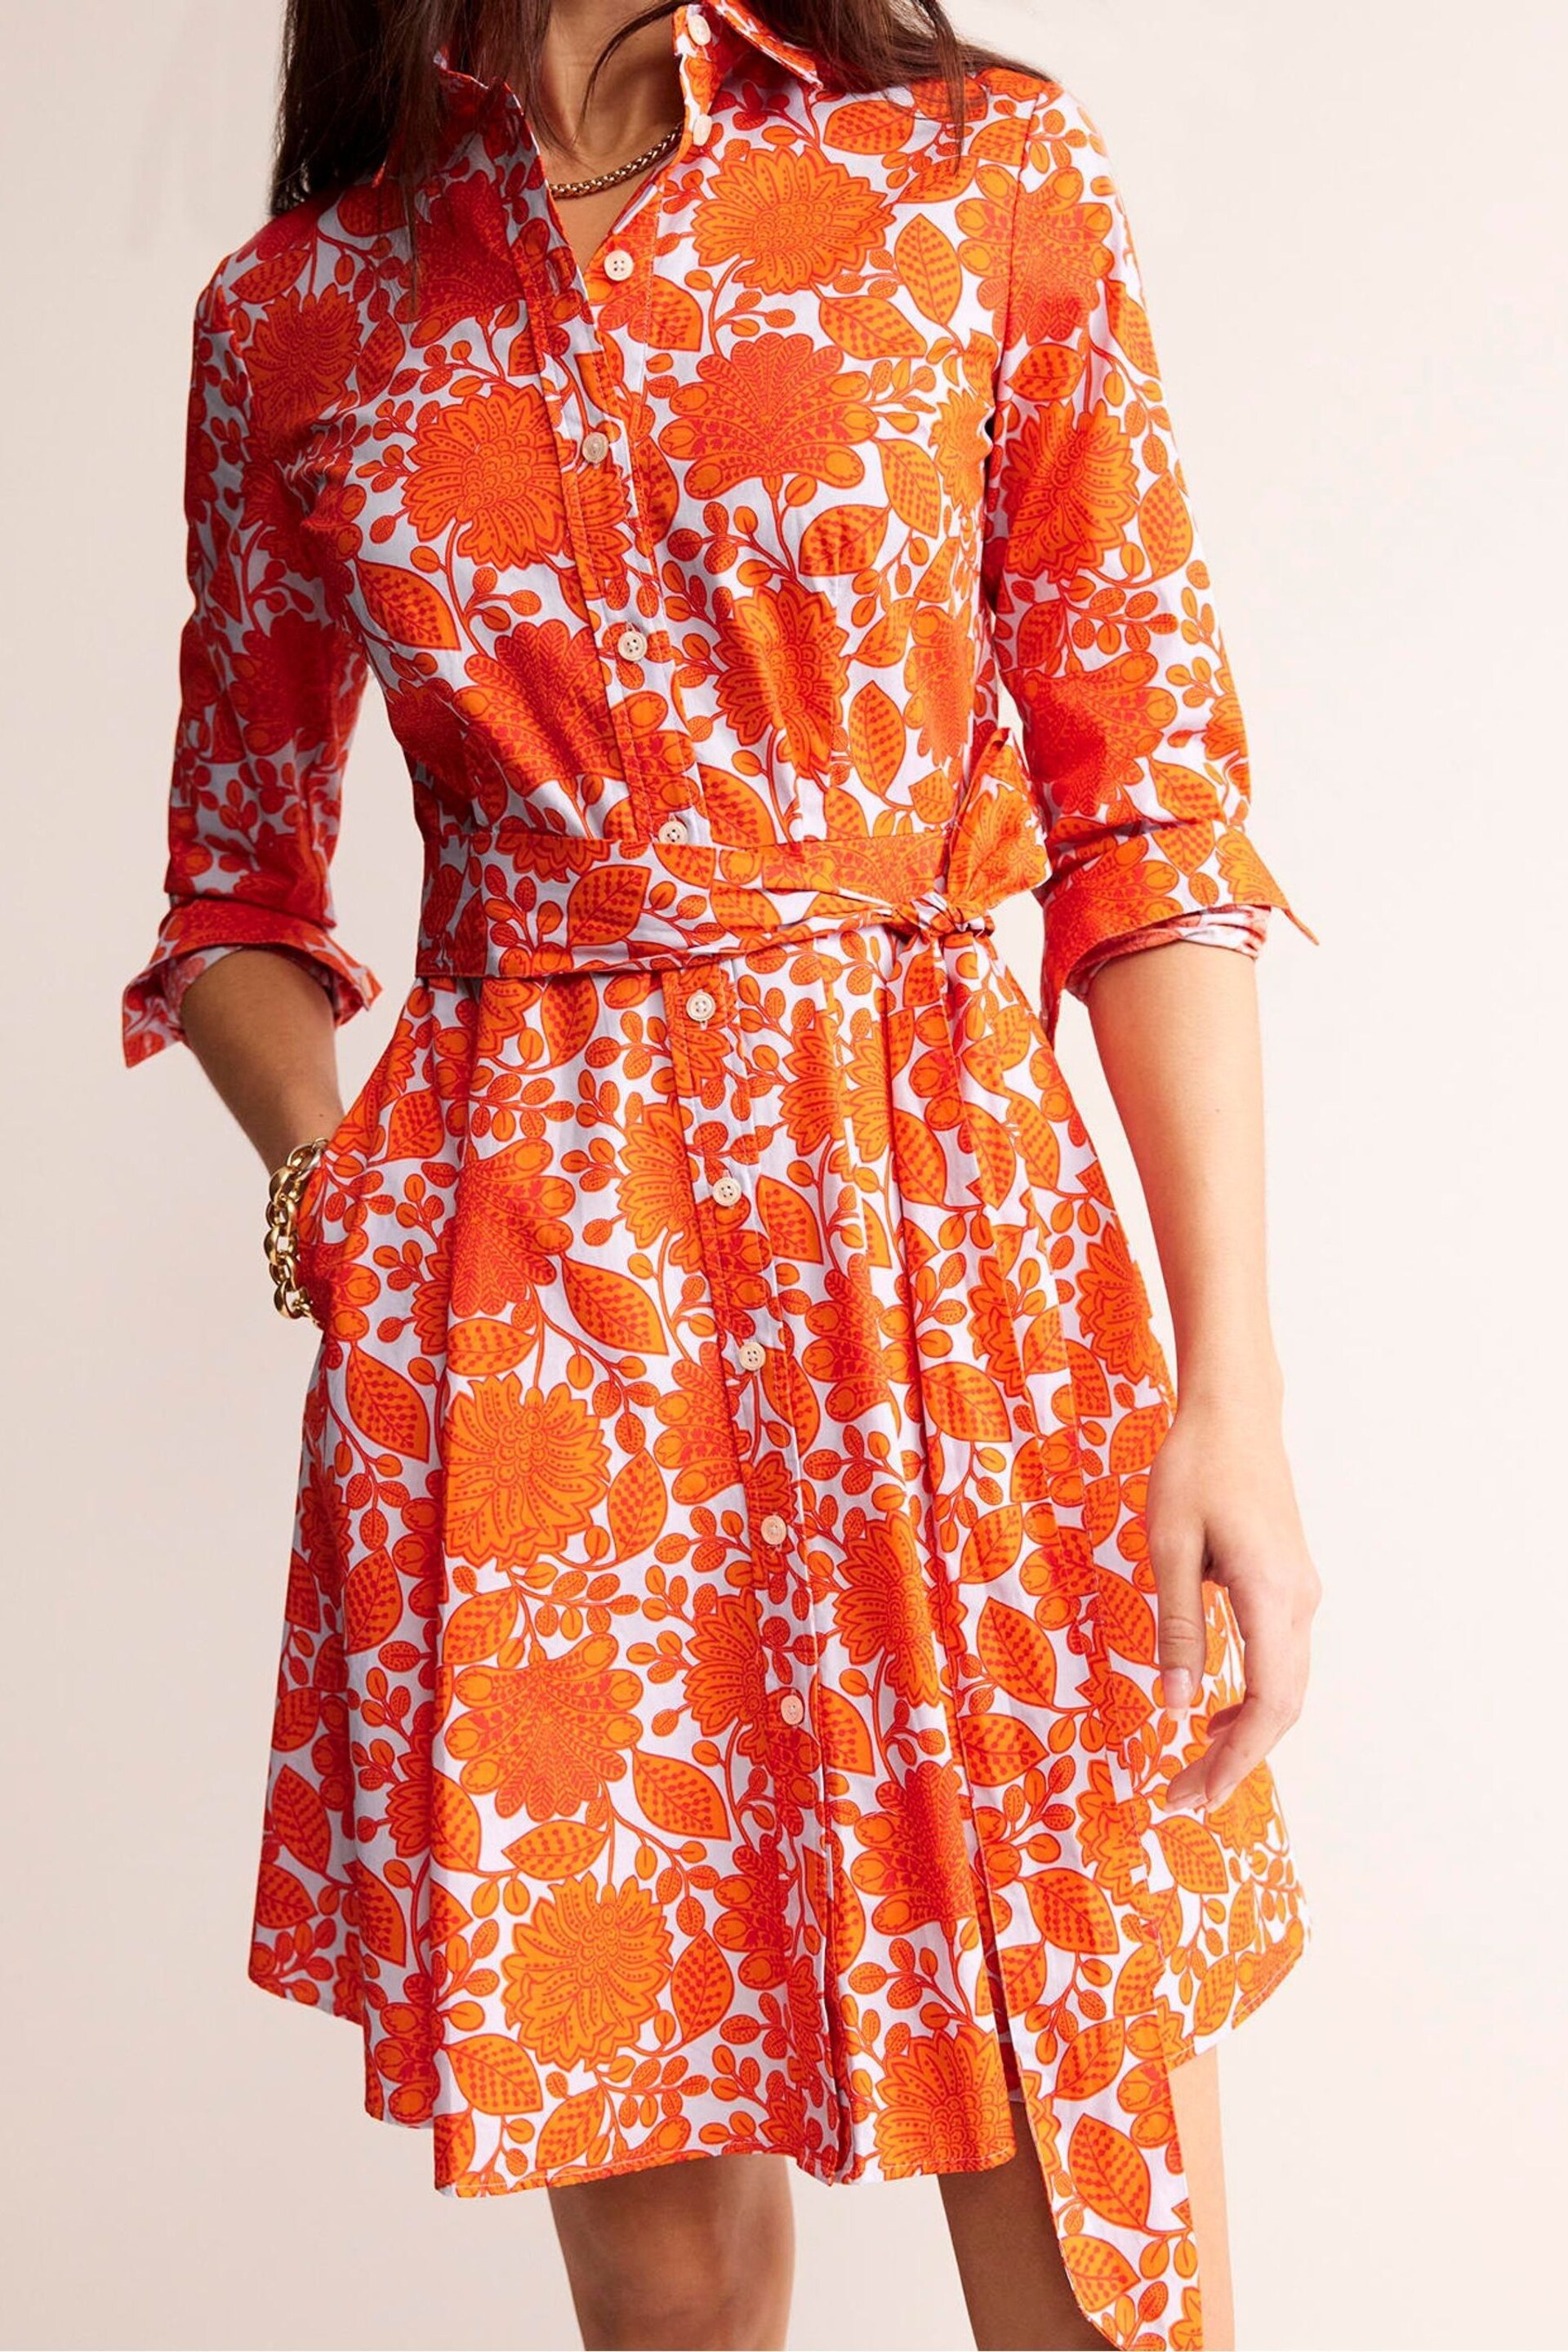 Boden Orange Amy Cotton Short Shirt Dress - Image 3 of 6